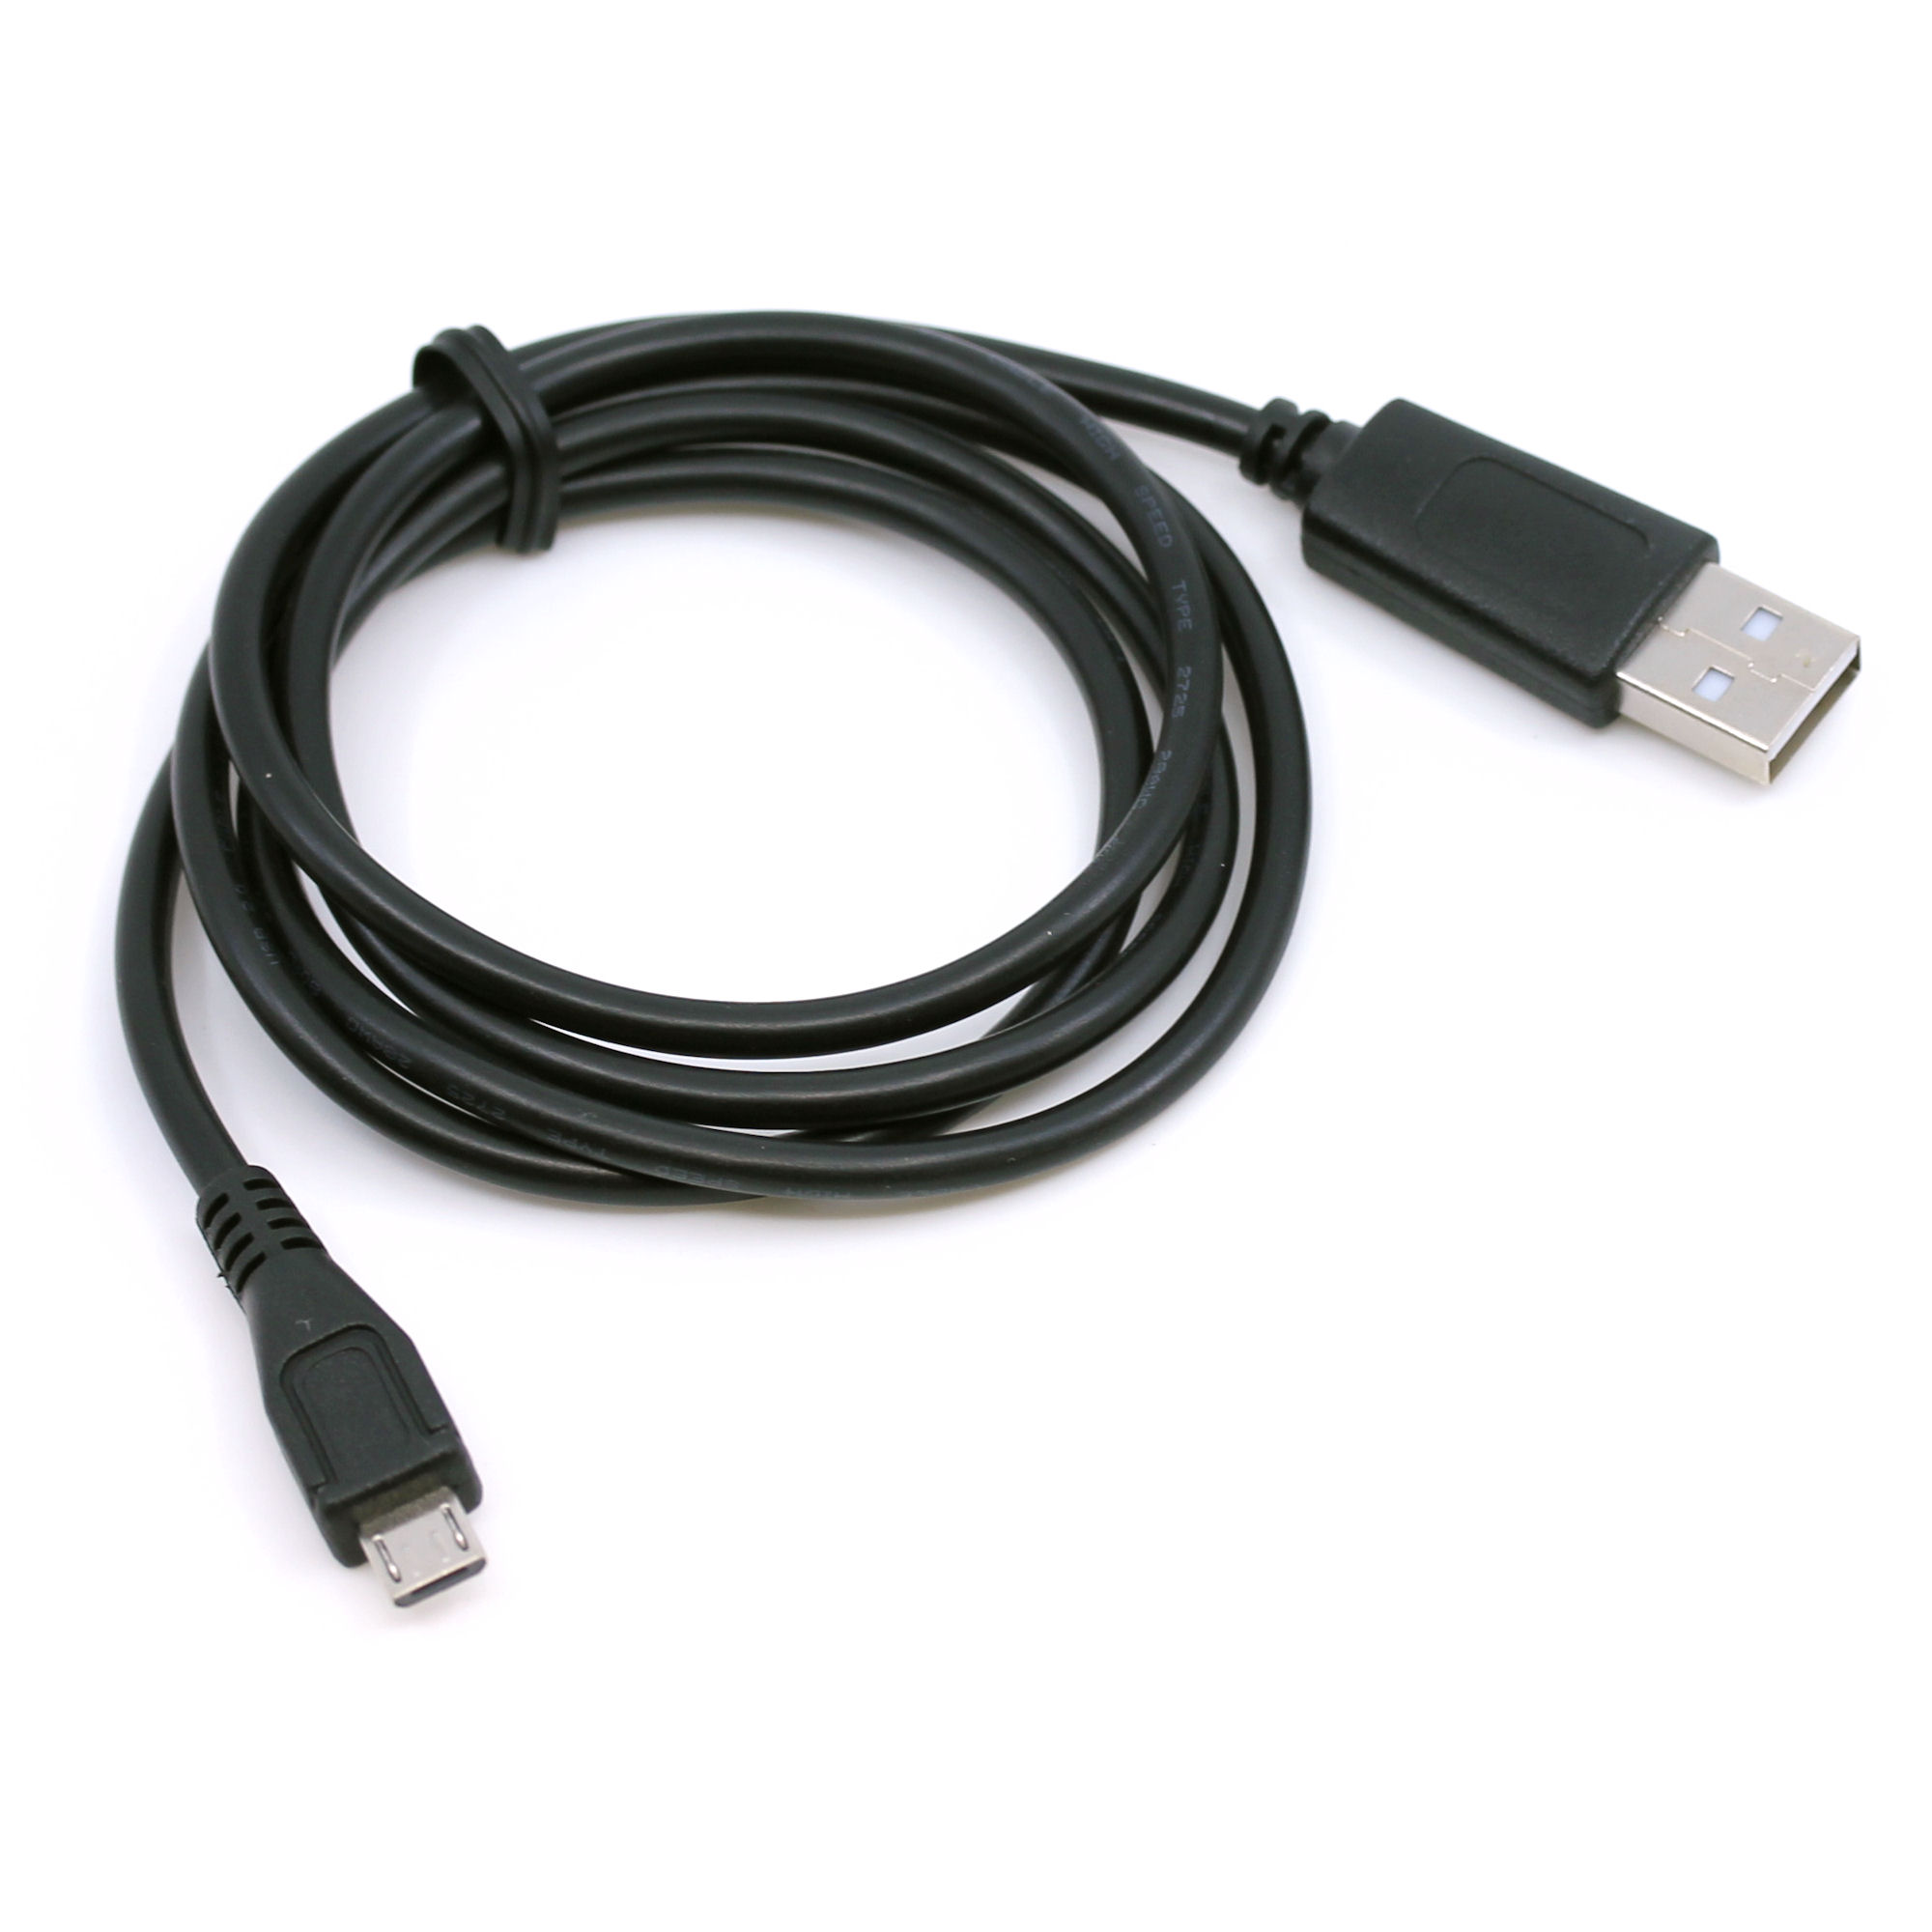 USB Datenkabel für Sony Cyber-Shot DSC-HX10, DSC-HX10V, DSC-HX20V, DSC-HX30, DSC-HX30V, DSC-HX300